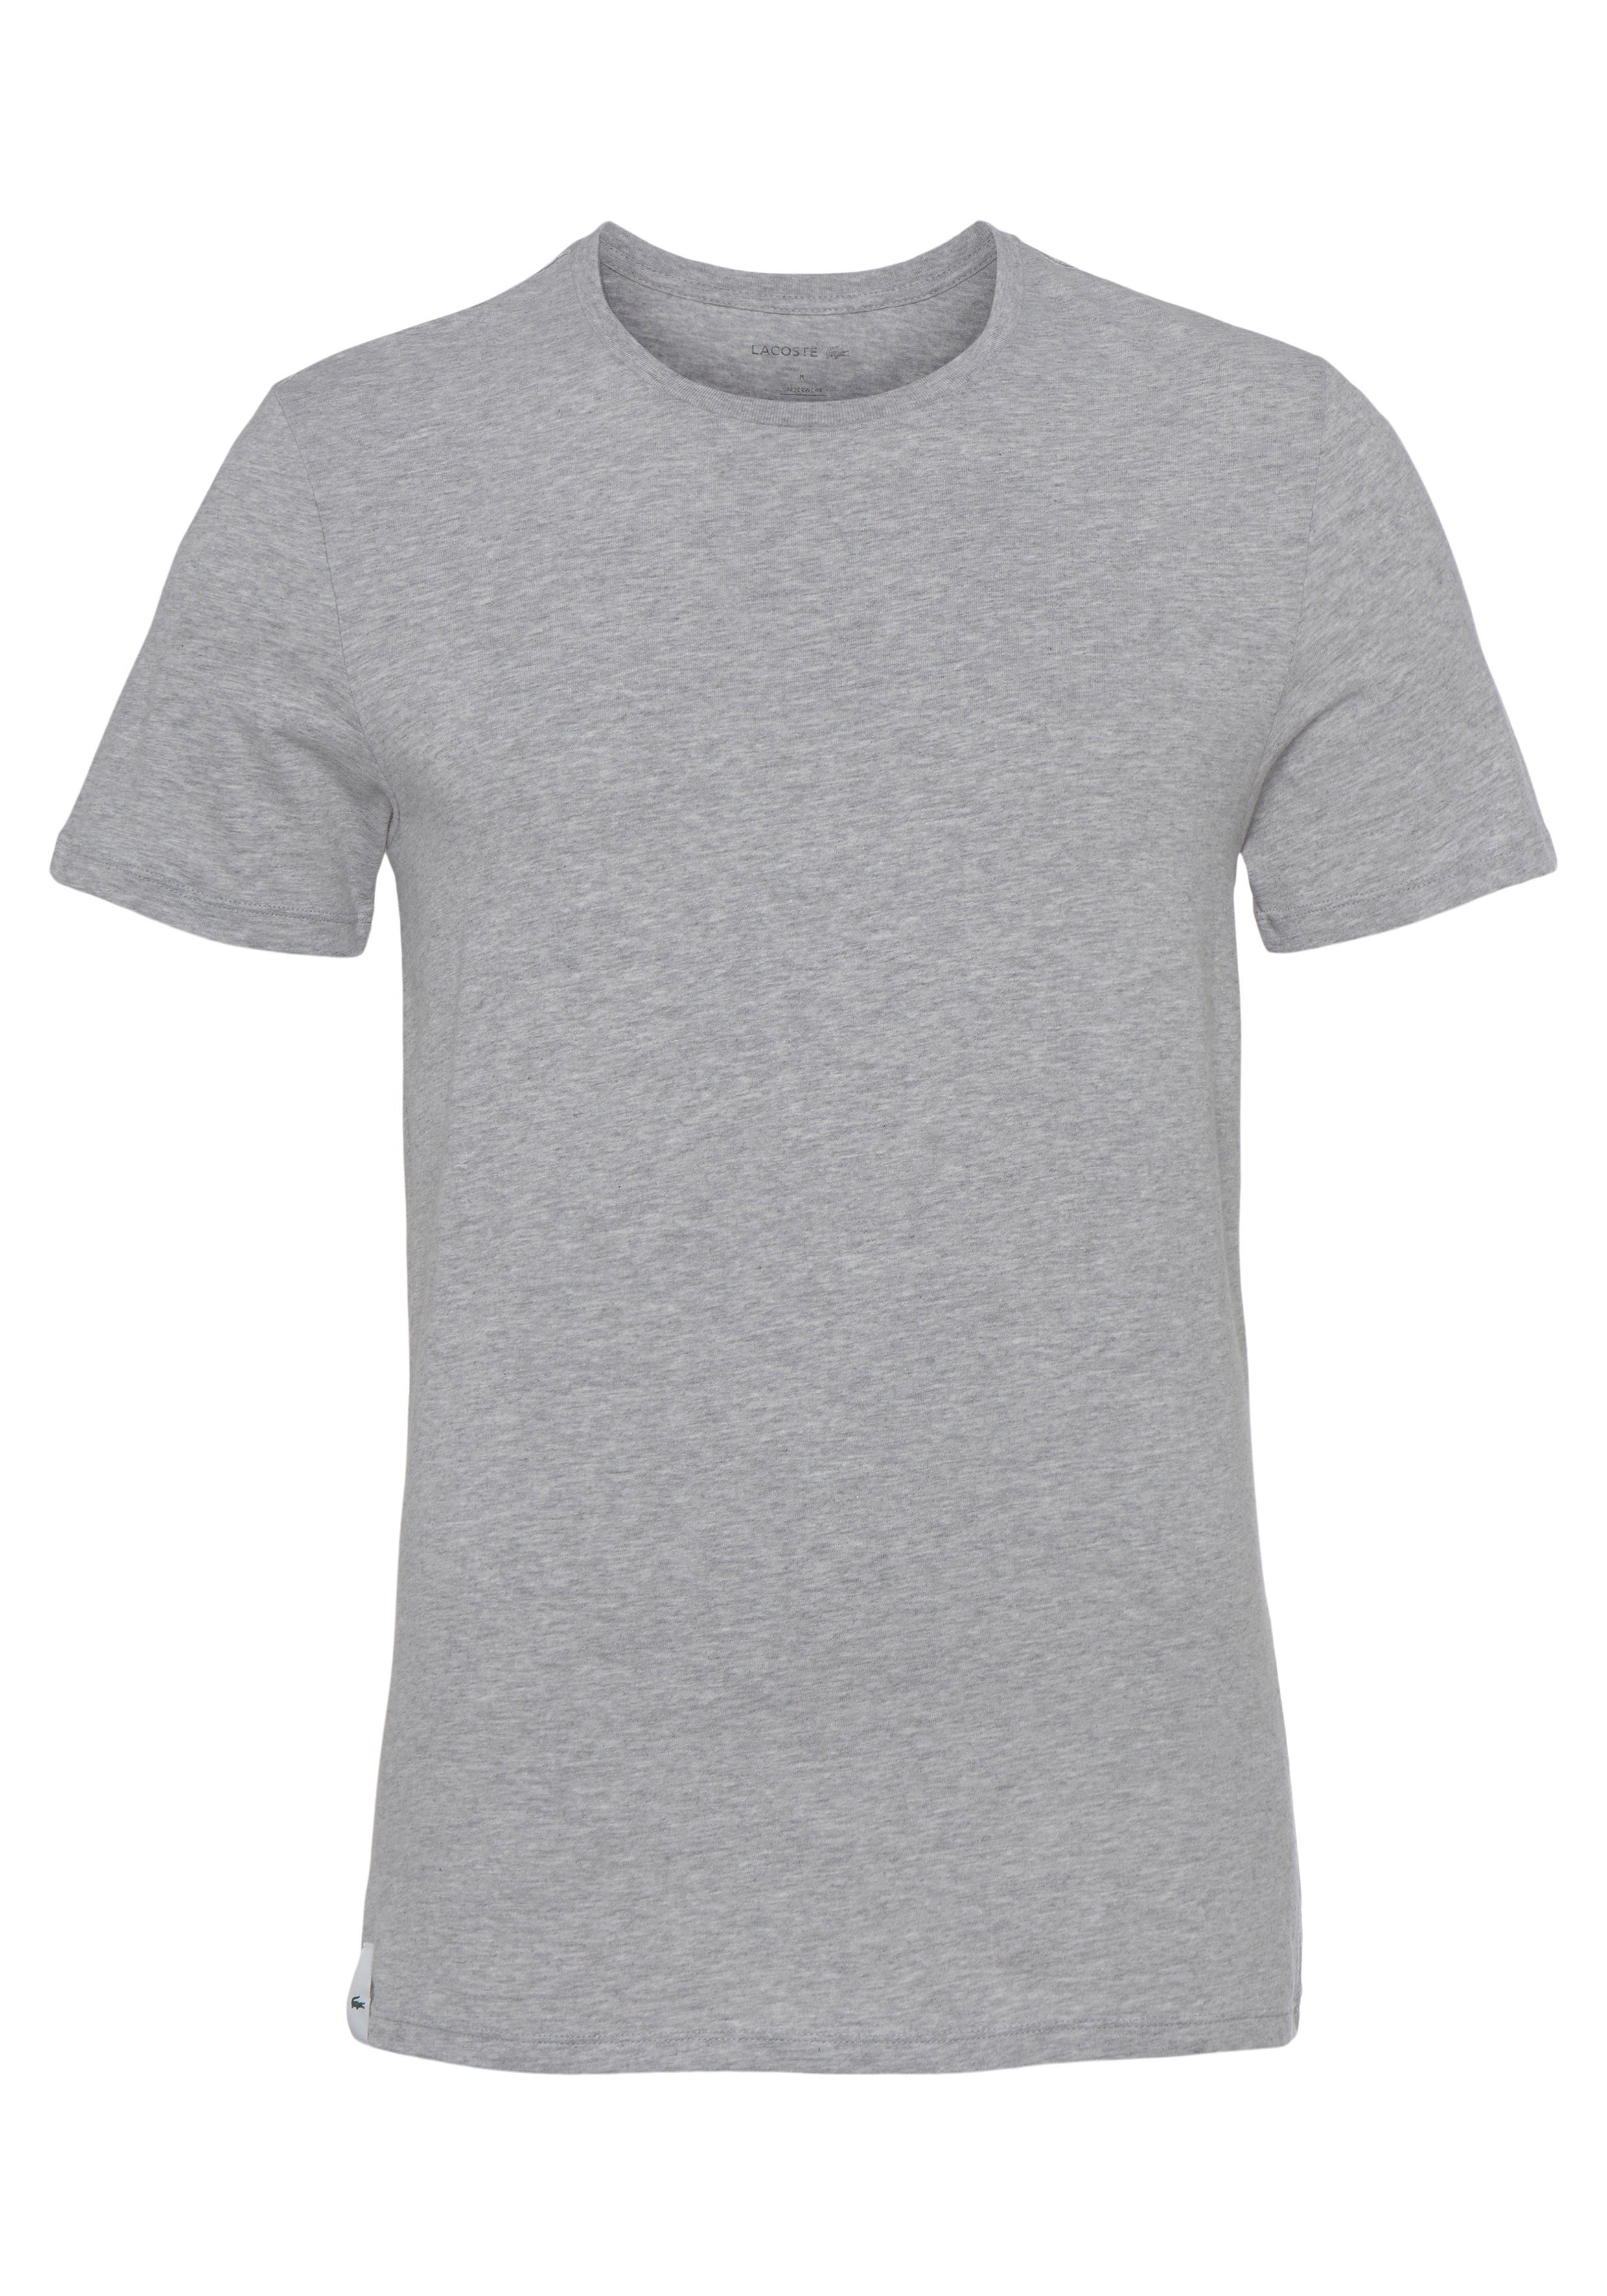 angenehmes (3er-Pack) weiß Atmungsaktives grau für schwarz T-Shirt Hautgefühl Baumwollmaterial Lacoste